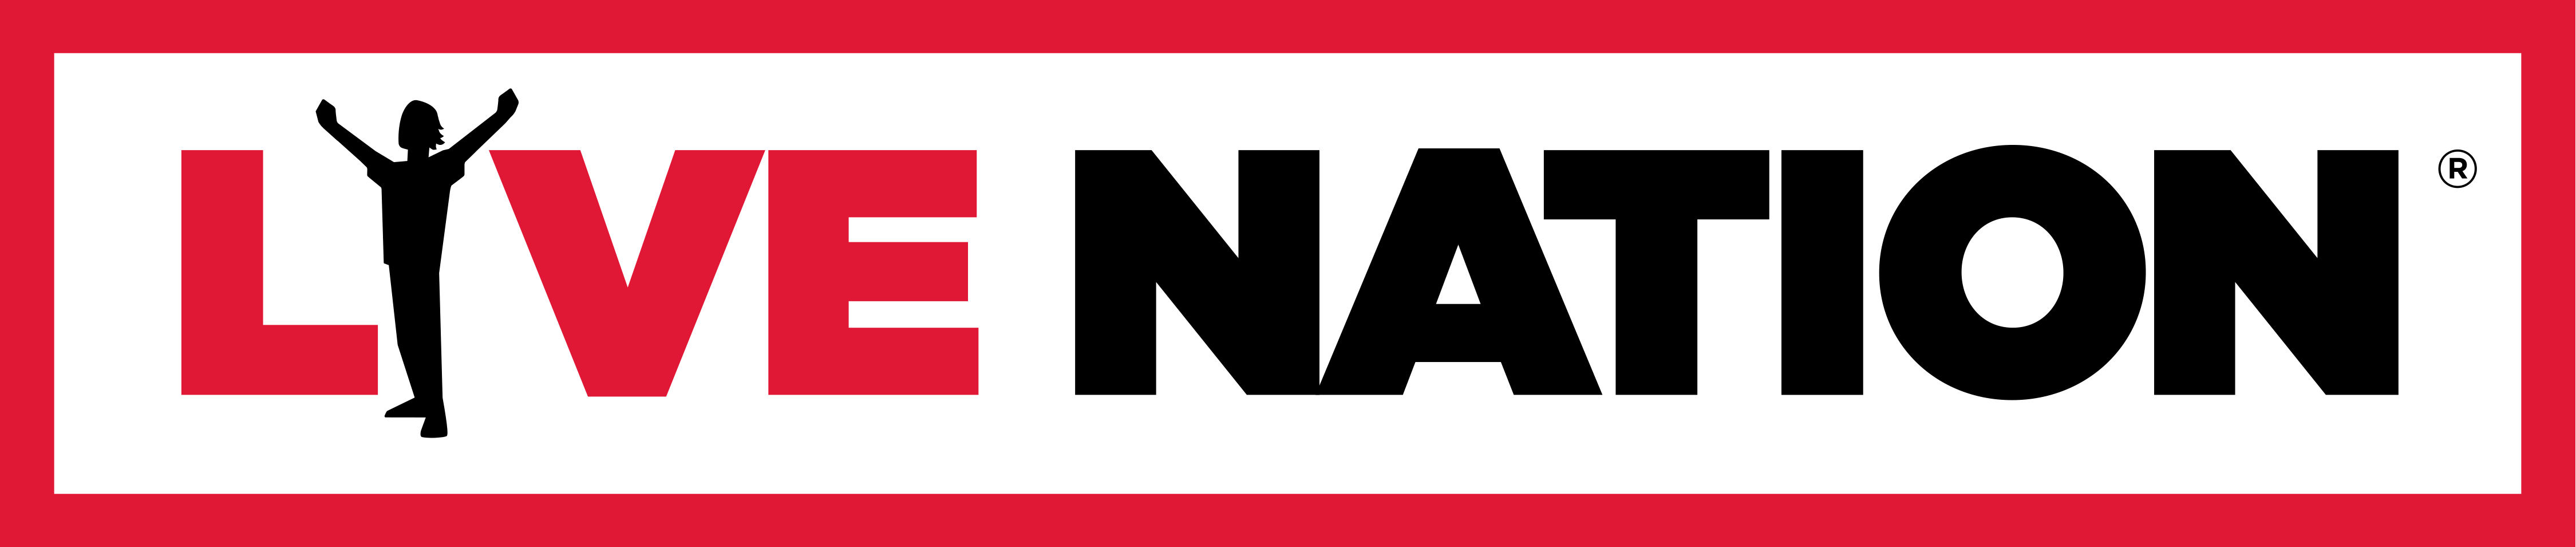 https://www.flanneryhealthandsafety.com/wp-content/uploads/2021/06/live-nation-logo.png